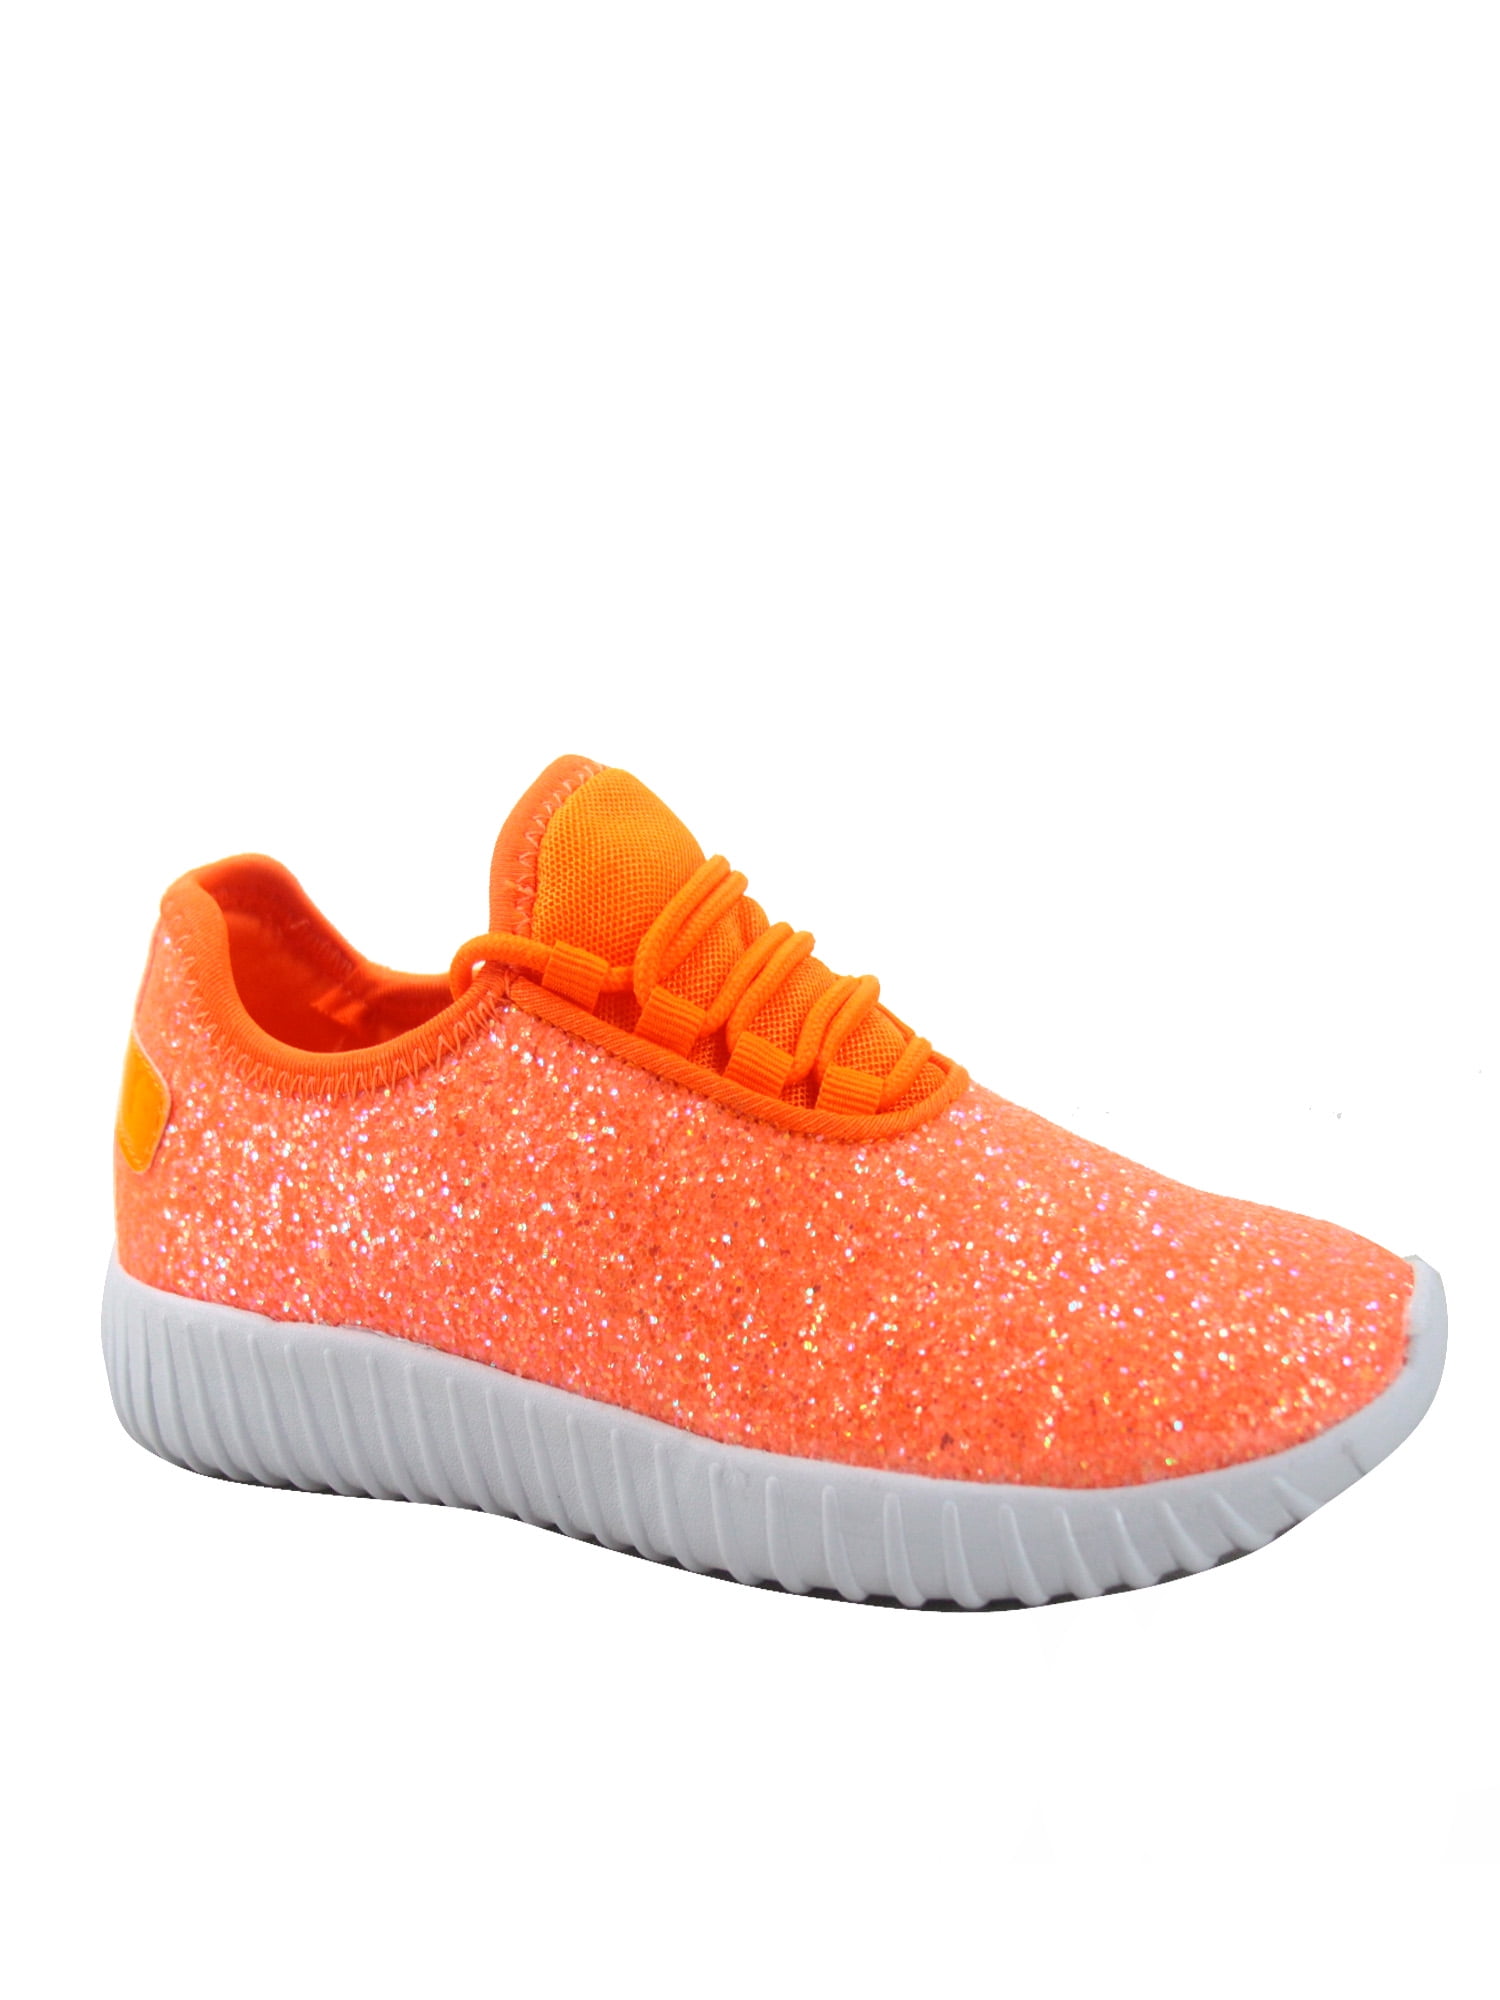 Orange Kids \u0026 Baby Shoes - Walmart.com